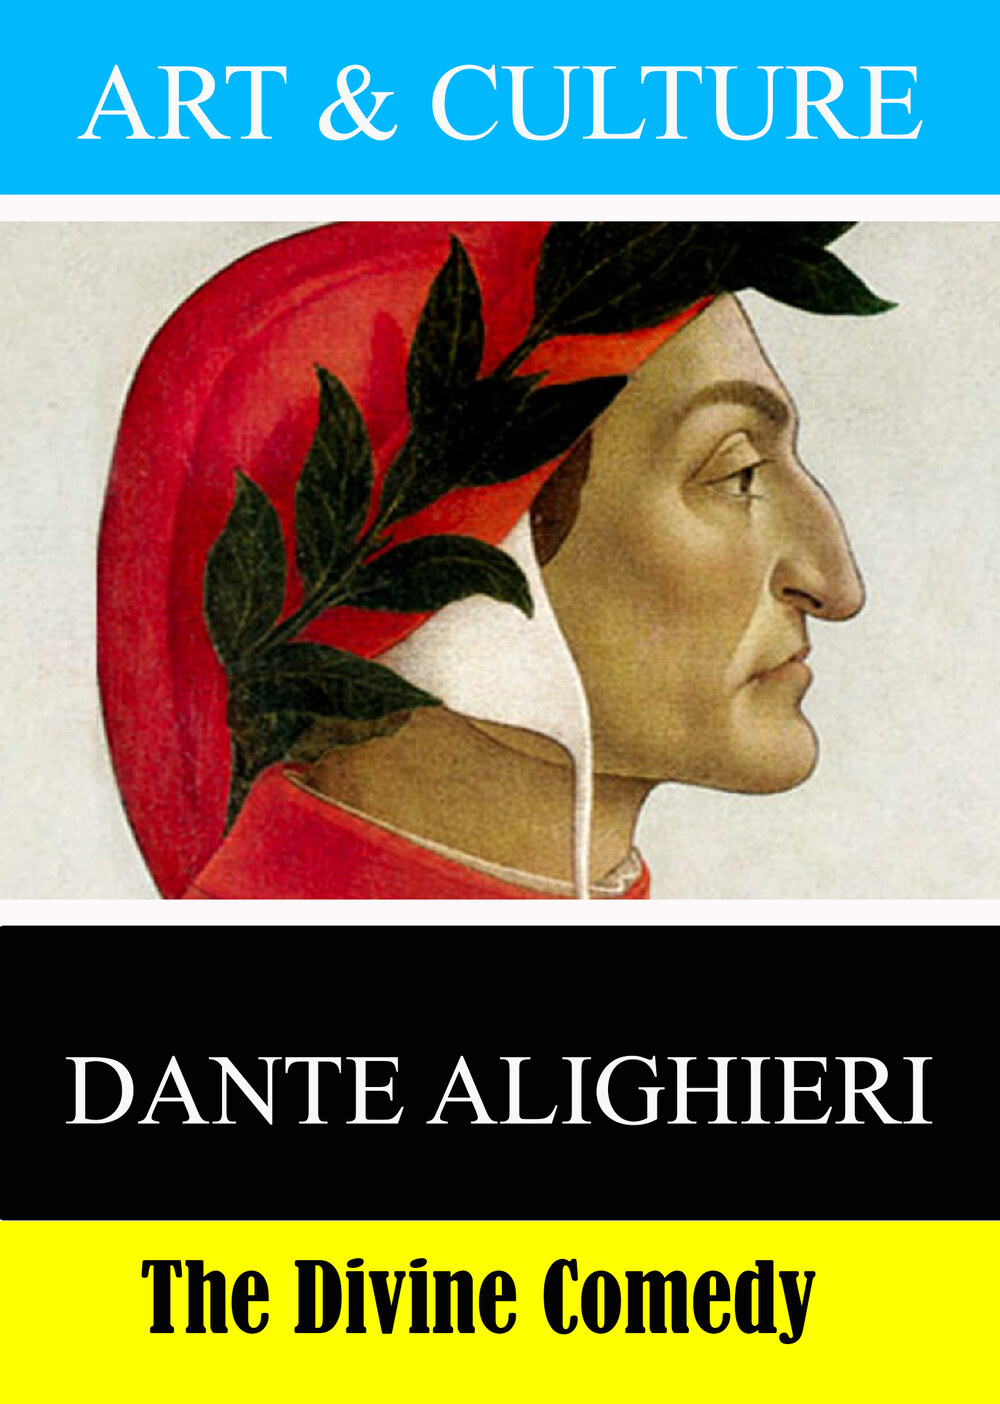 L7941 - Art & Culture: The Divine Comedy by Dante Alighieri